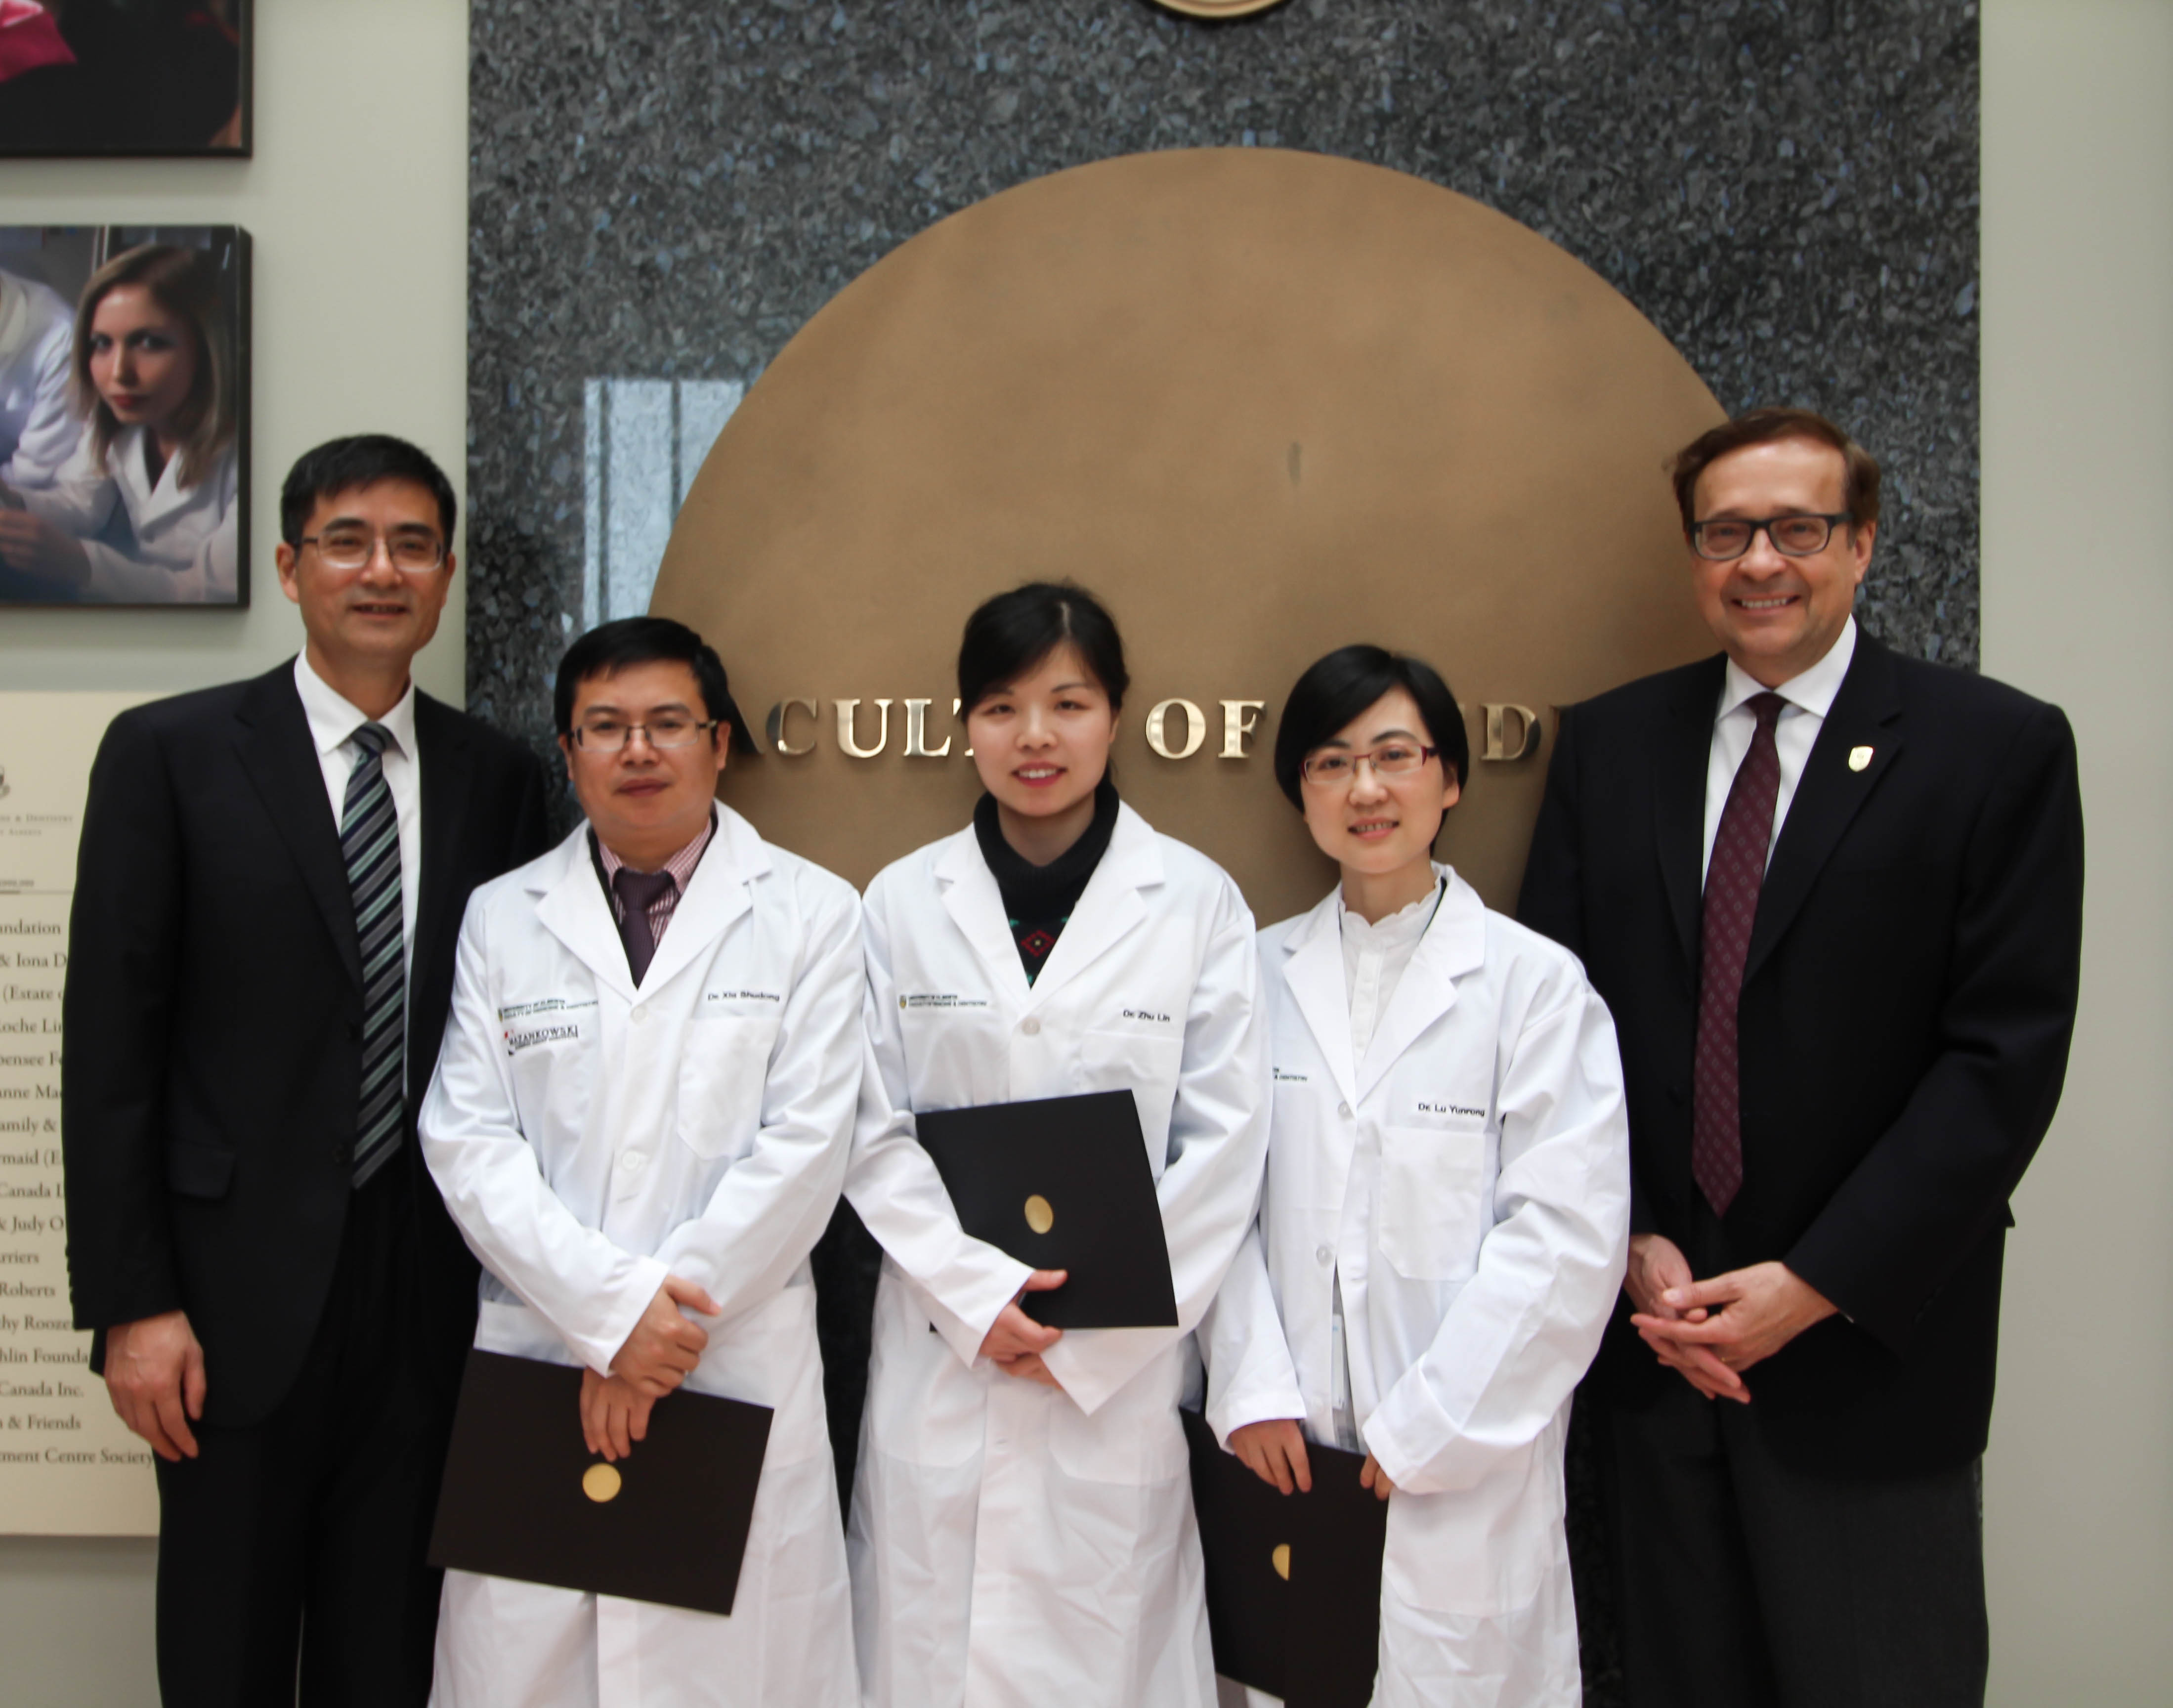 Graduates of UAlberta's Young Physician Training Program